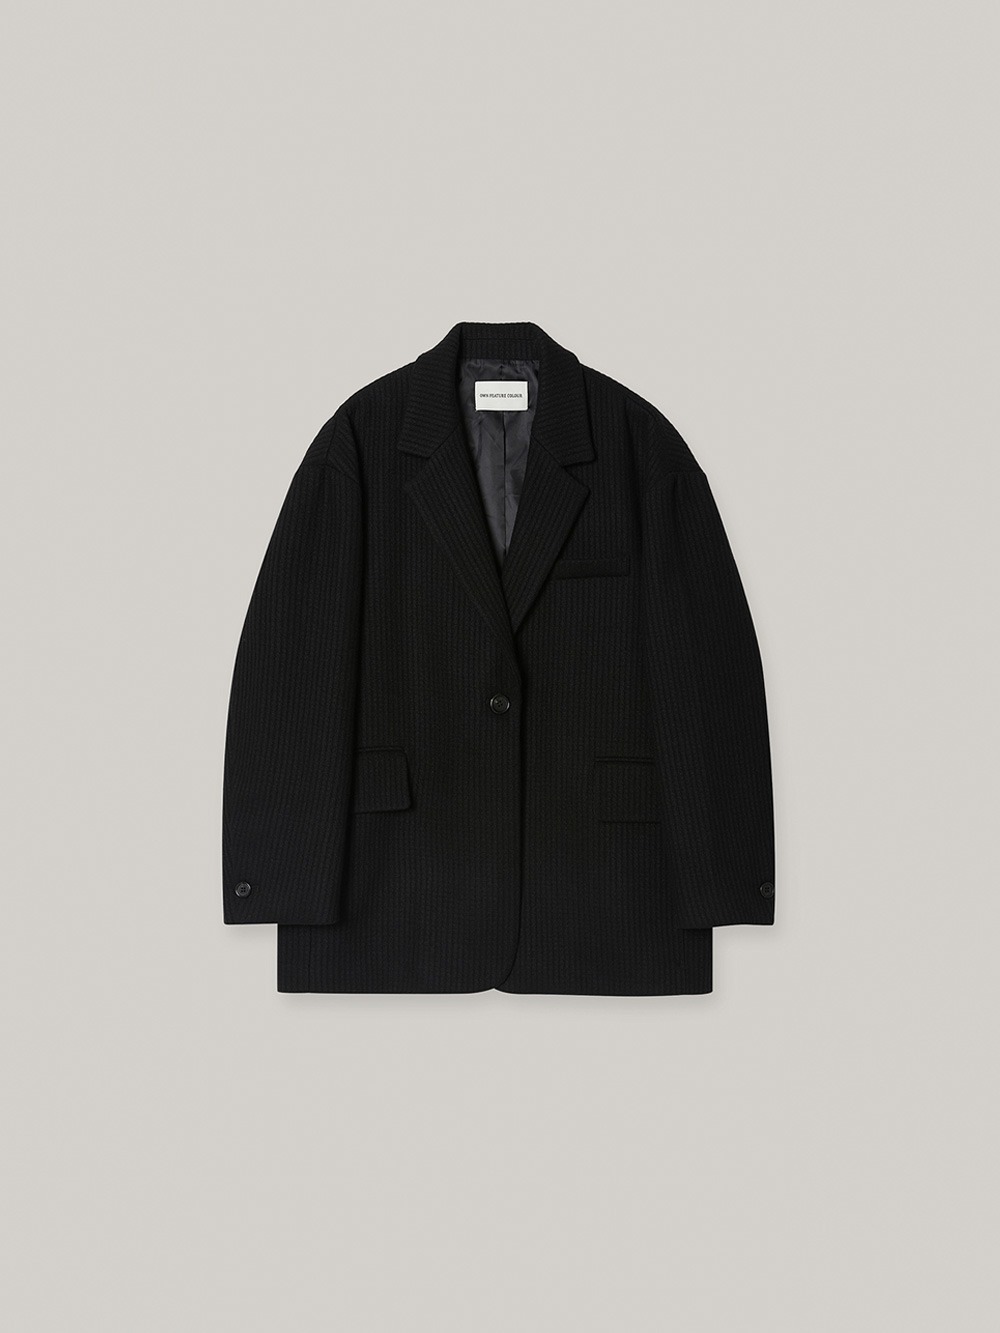 Cocoon Silhouette Jacket (black)